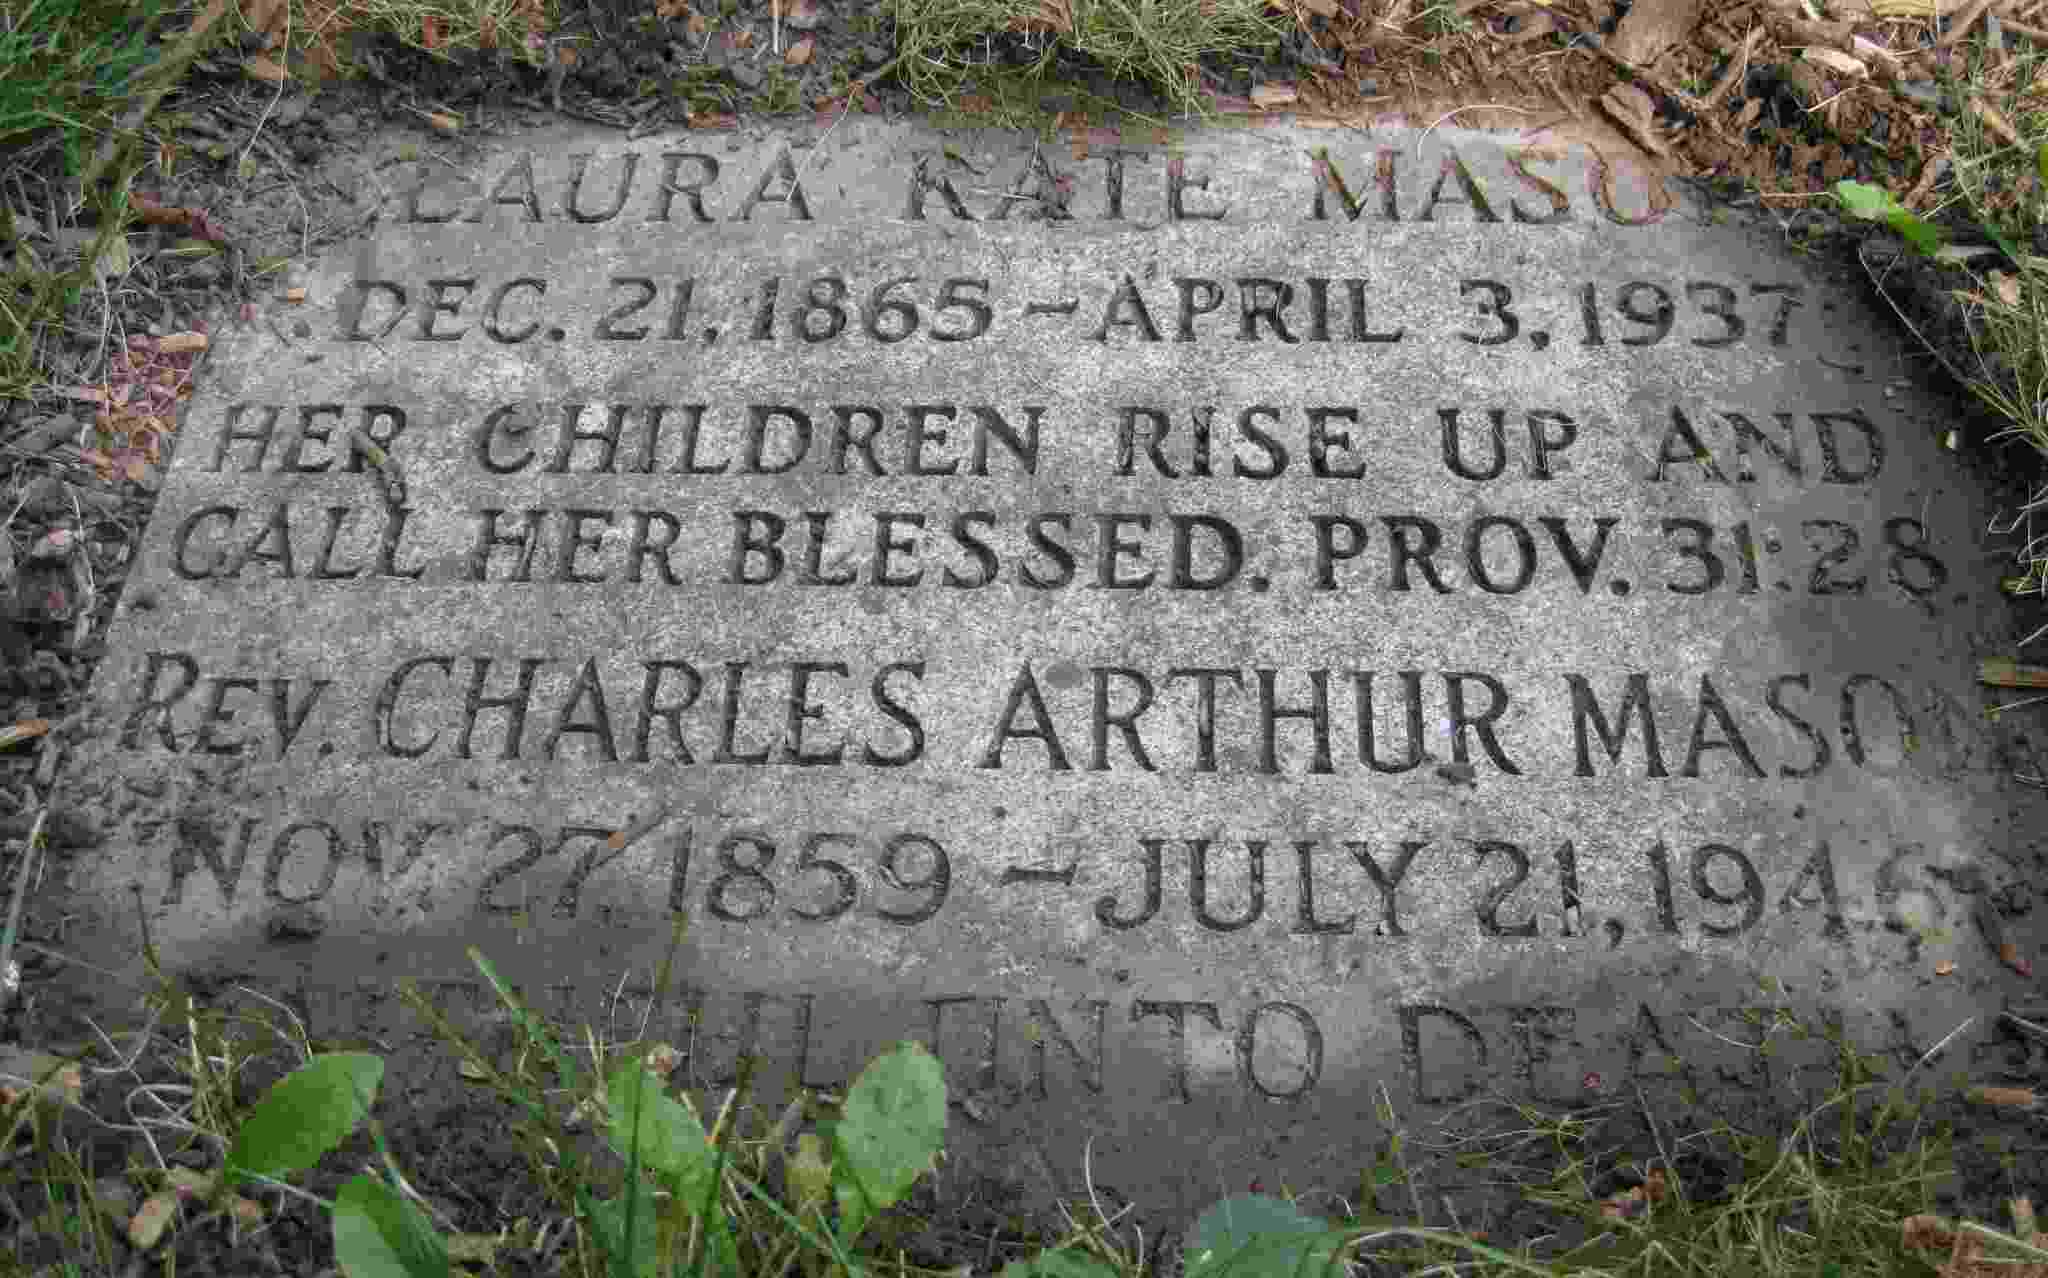 Gravestone of Laura Kate (Plumbe) Mason and Charles Arthur Mason